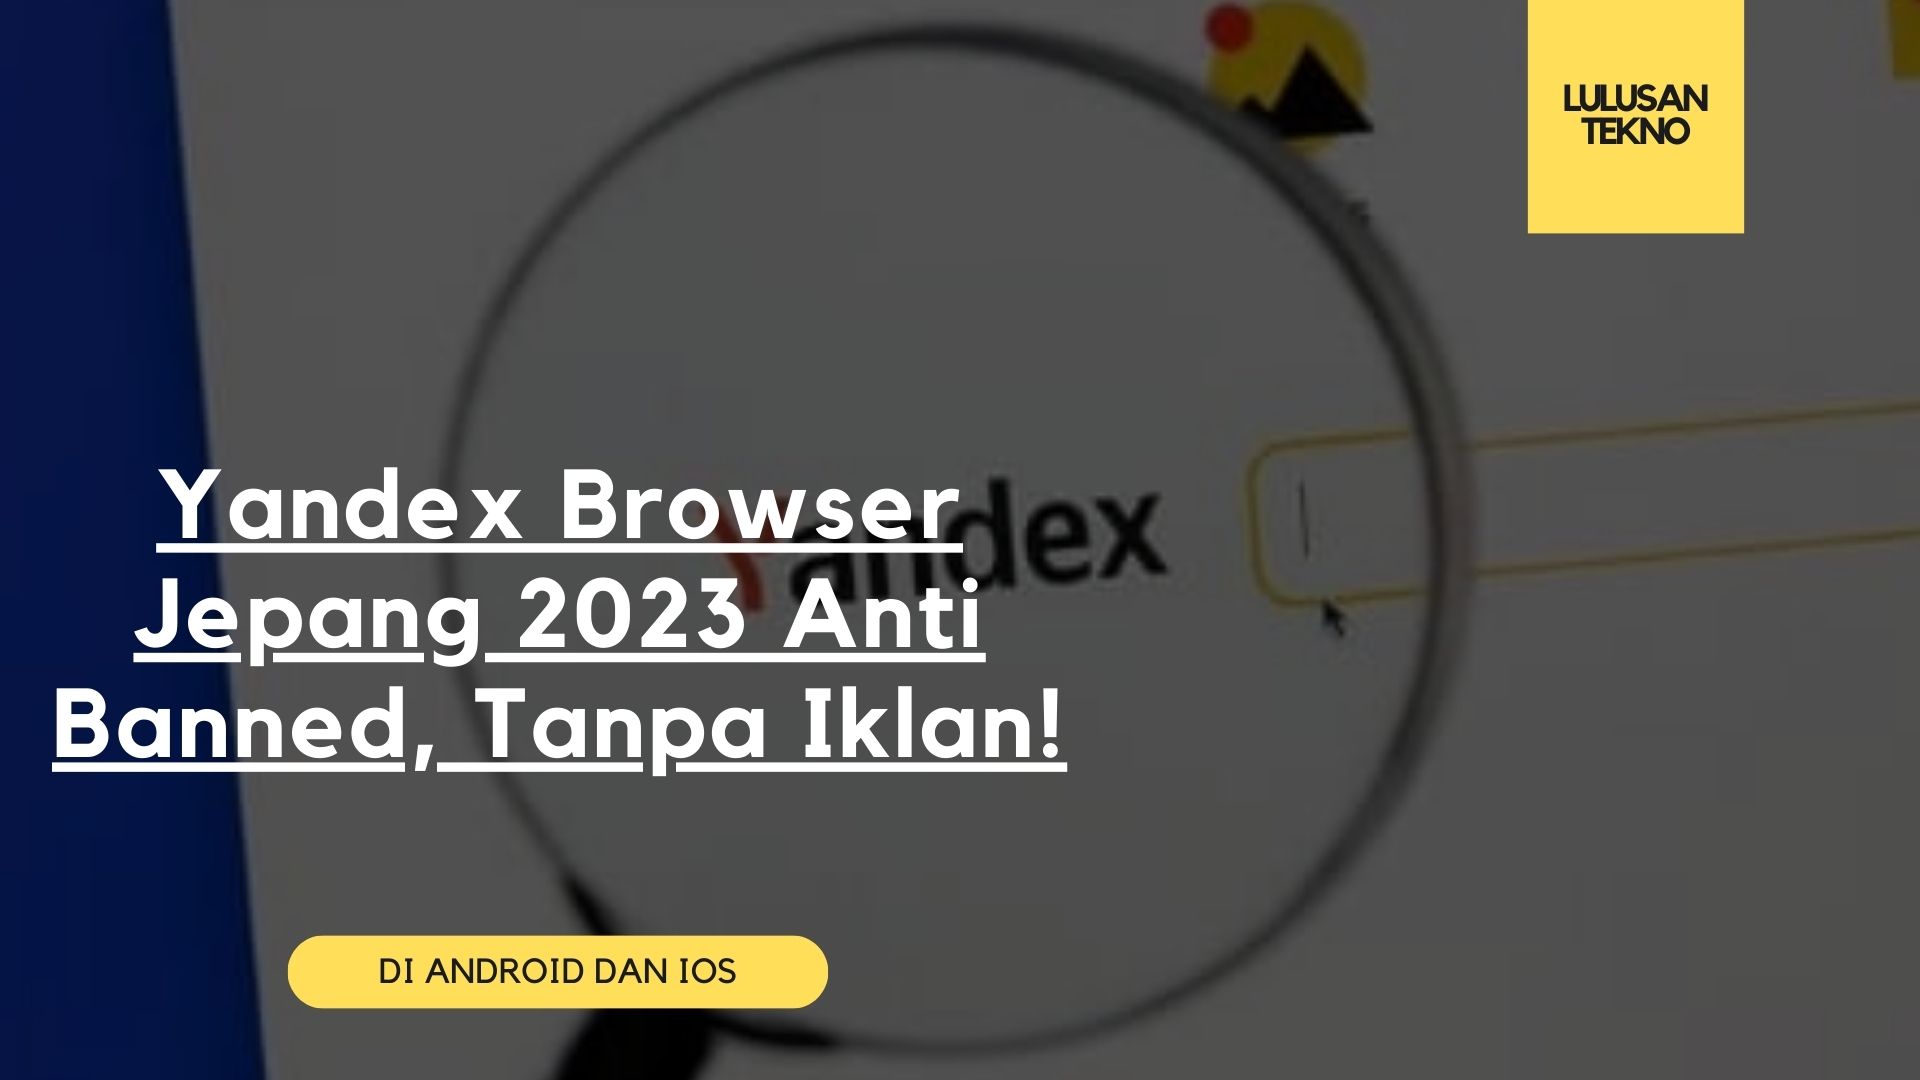 Yandex Browser Jepang 2023 Anti Banned, Tanpa Iklan!